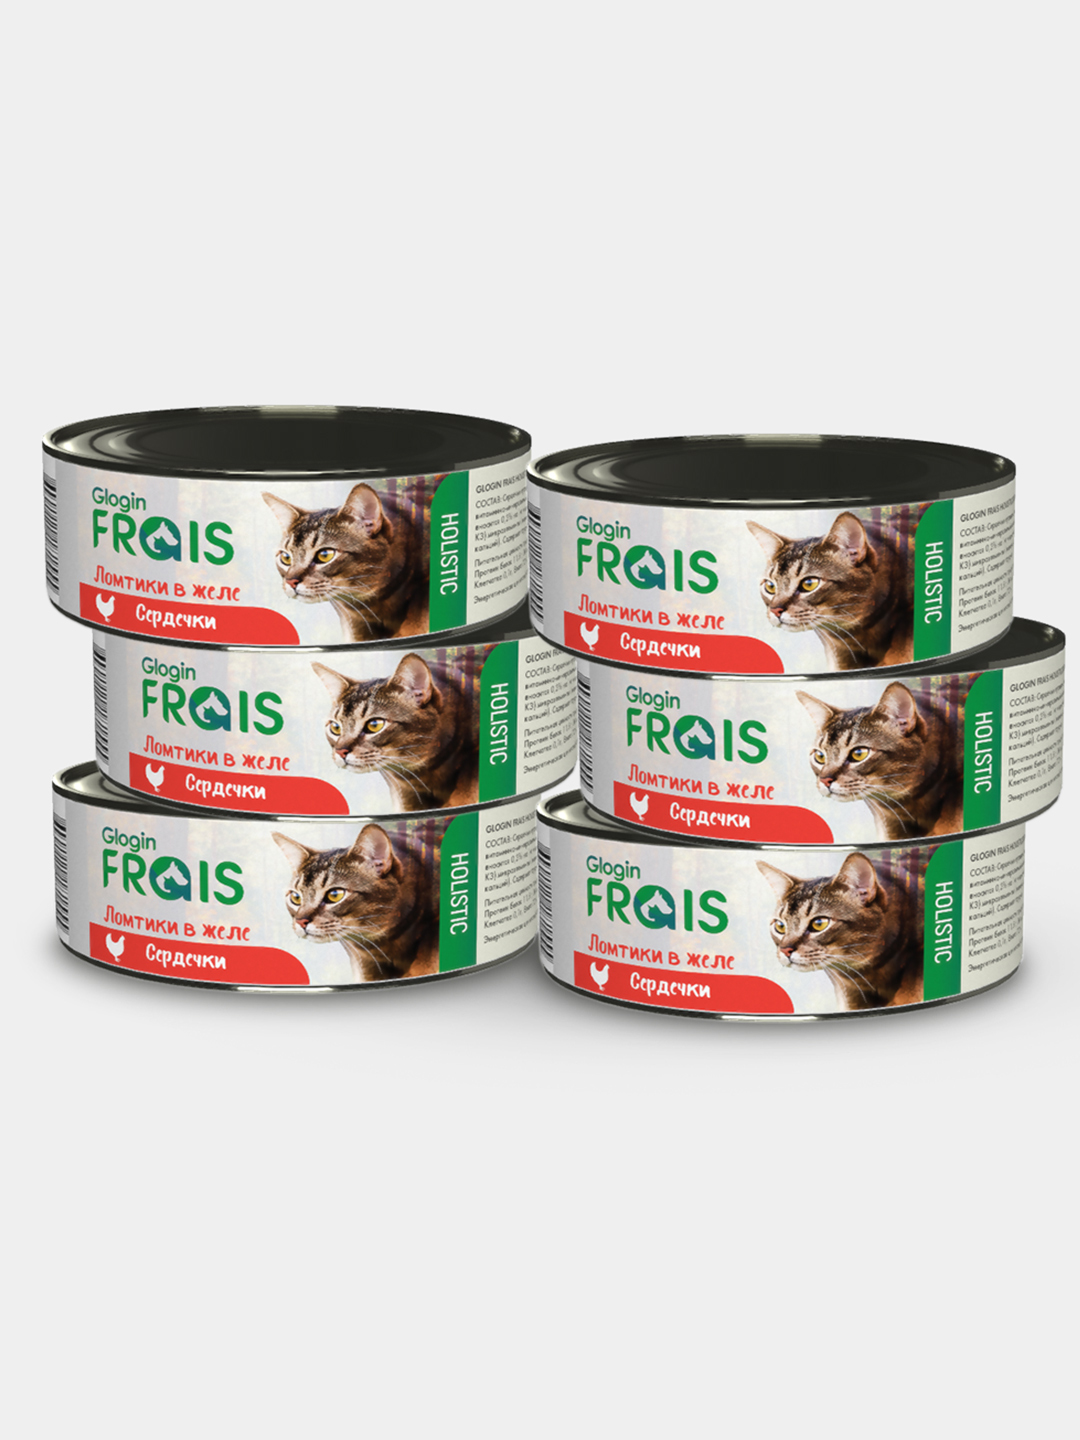 Индейка в желе. Корм glogin Frais. Корм для кошек Frais влажный. Glogin Frais корм для кошек сухой. Влажный корм для кошек холистик.